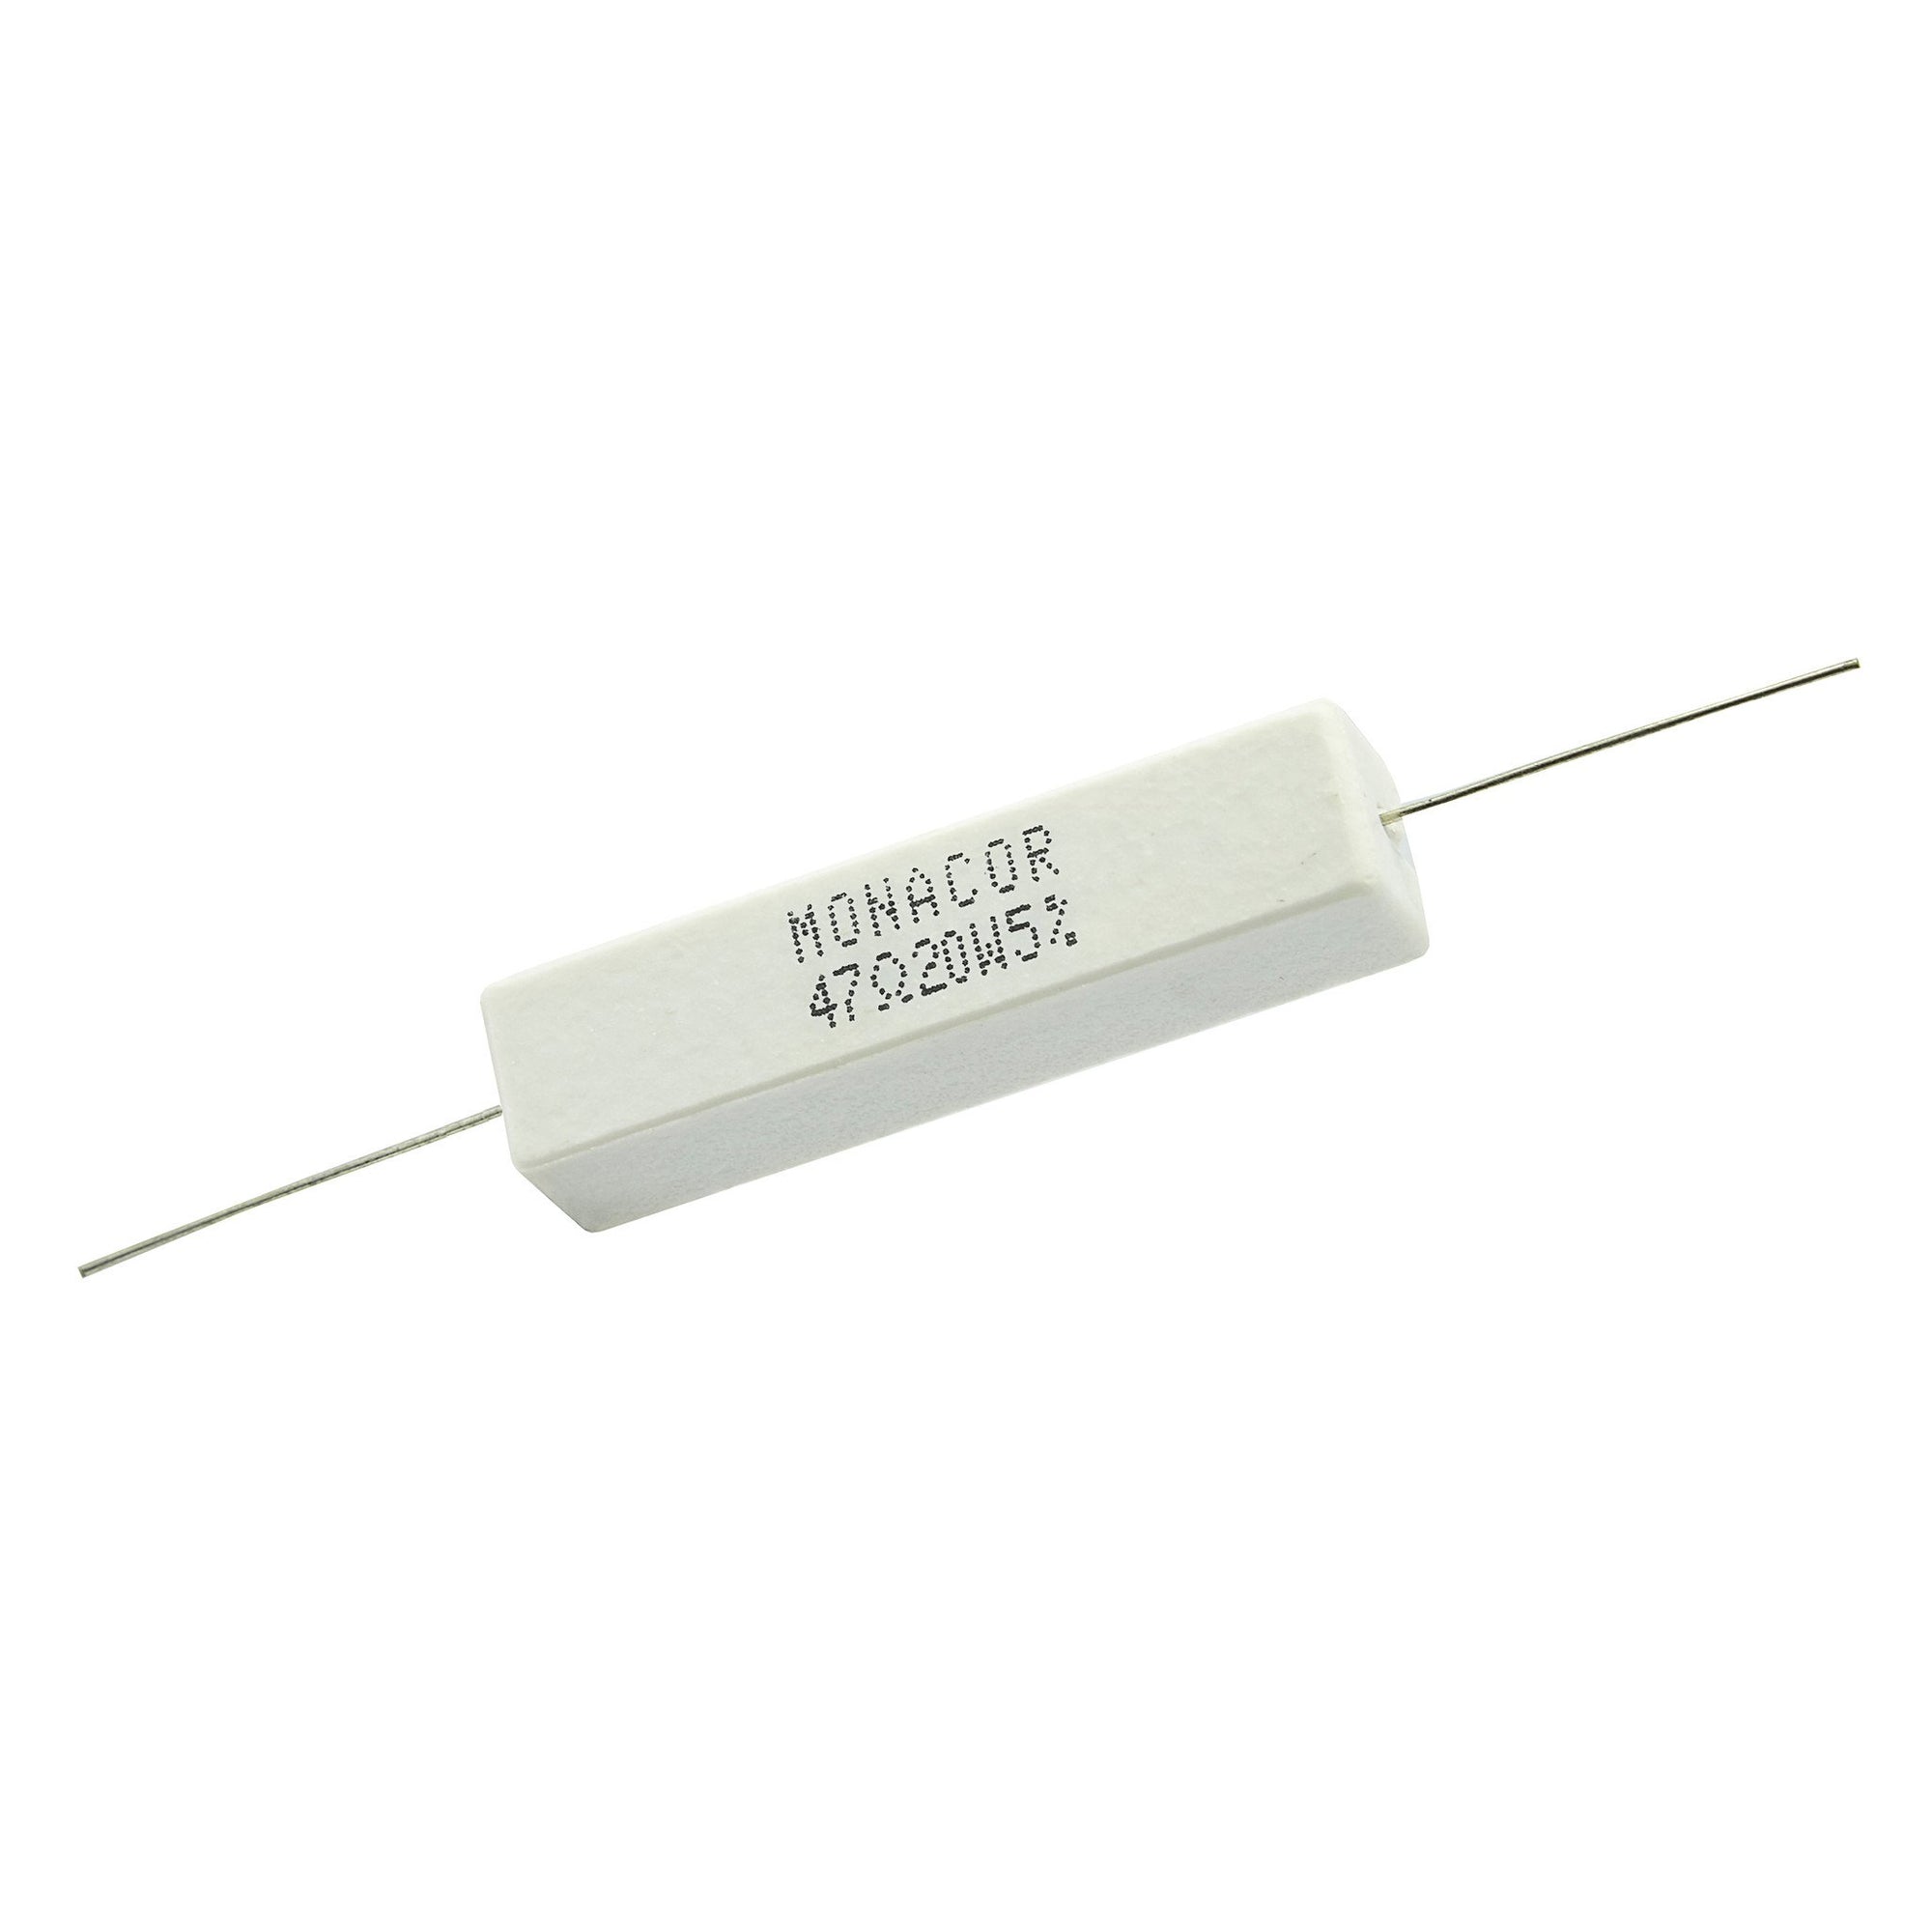 47 Ohm 20 Watt 5% Ceramic Wirewound Resistor - Willys-Hifi Ltd